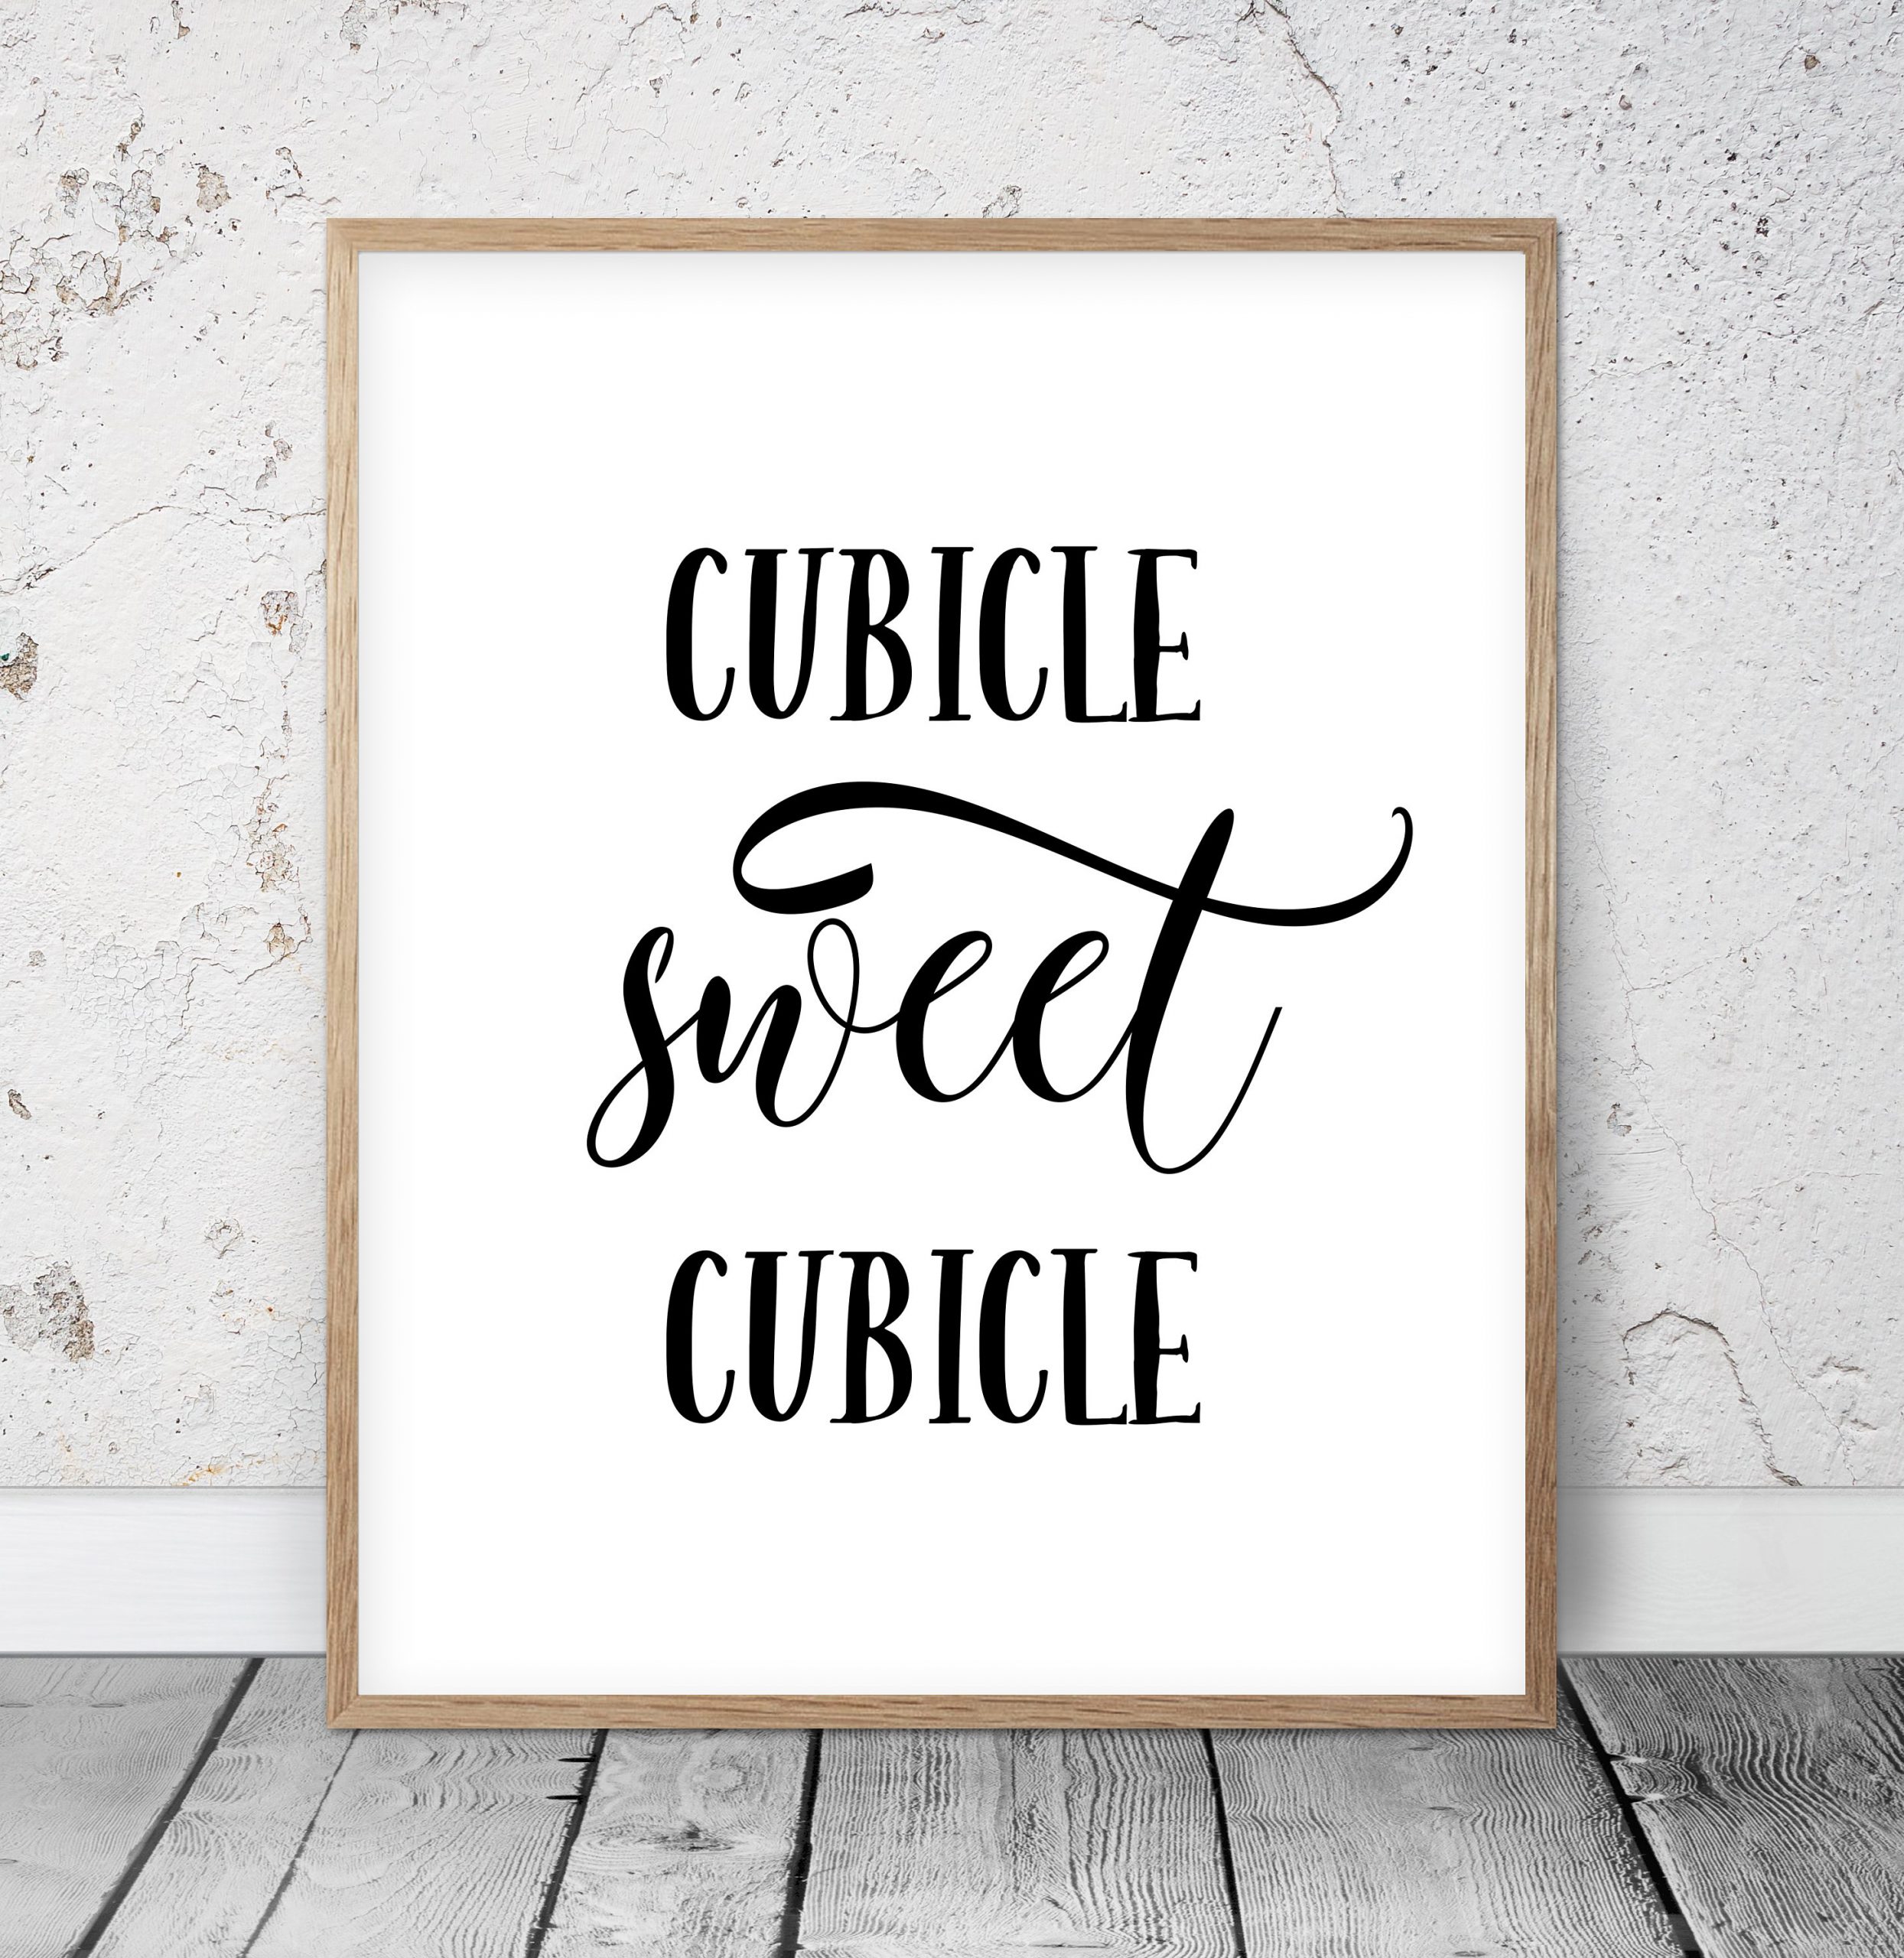 Cubicle Sweet Cubicle Motivational Quote Poster Print - Art Print Studio